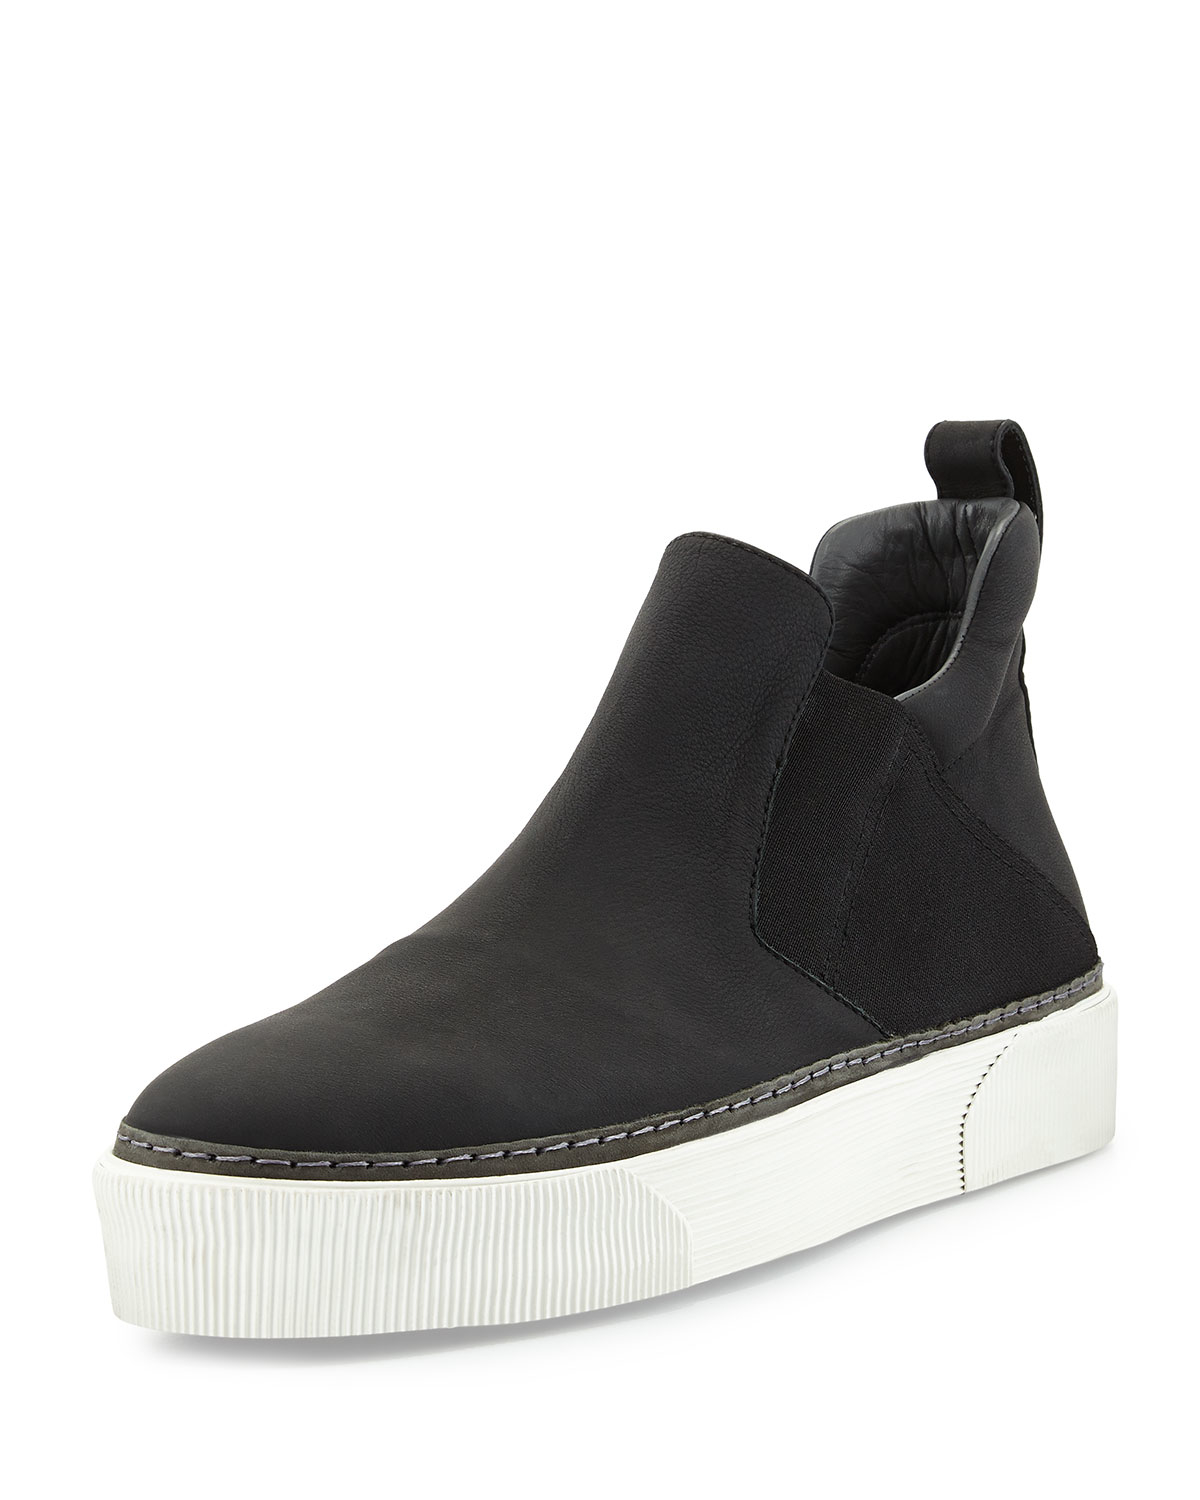 Lyst - Lanvin Leather High-top Slip-on Sneaker in Black for Men